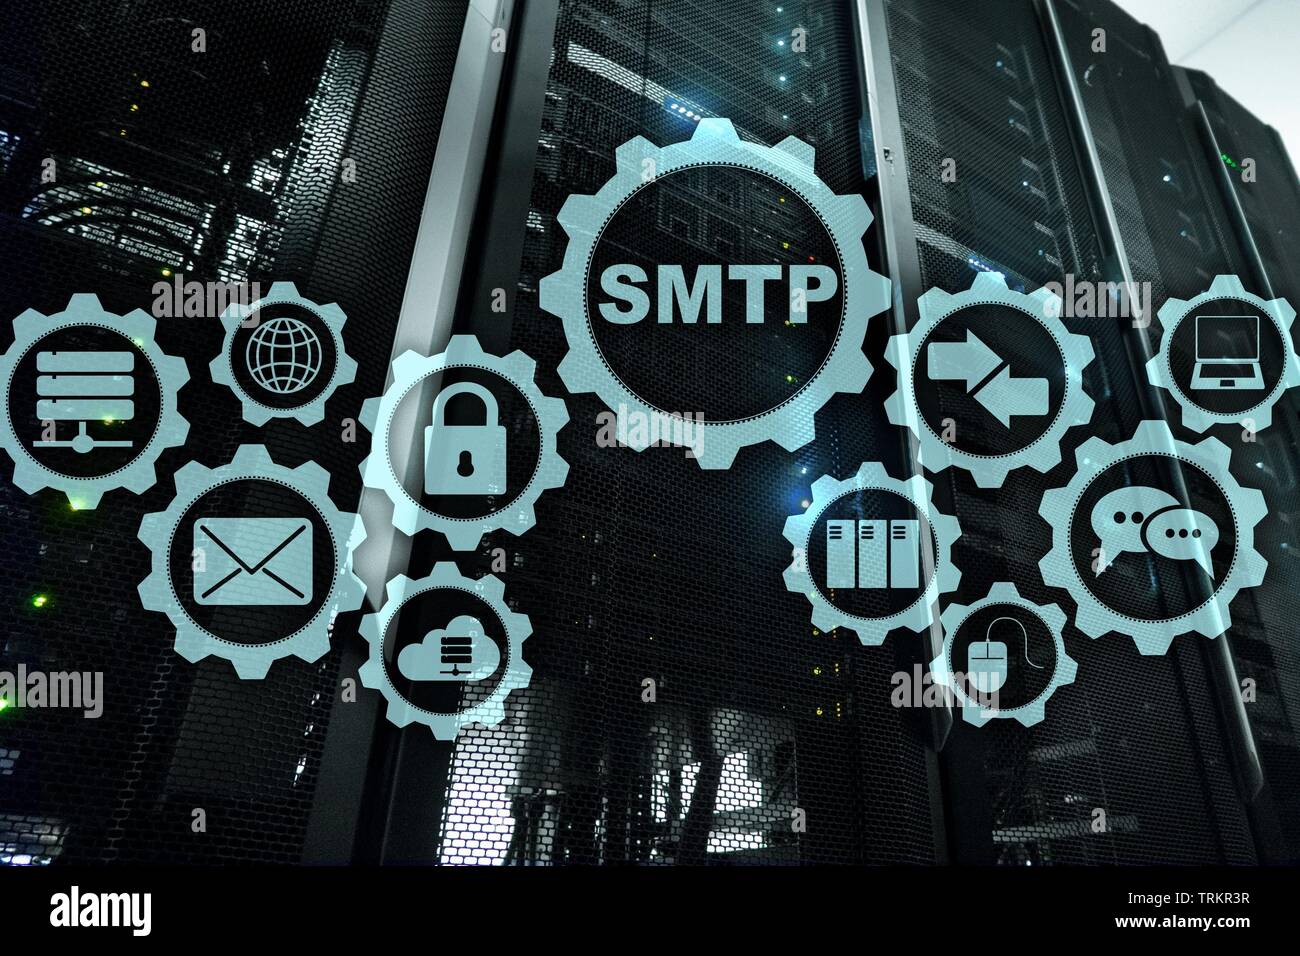 Smtp - server mail transfer protocol. TCP IP protocol sending and receiving  e-mail. Simple Mail Transfer Protocol Stock Photo - Alamy